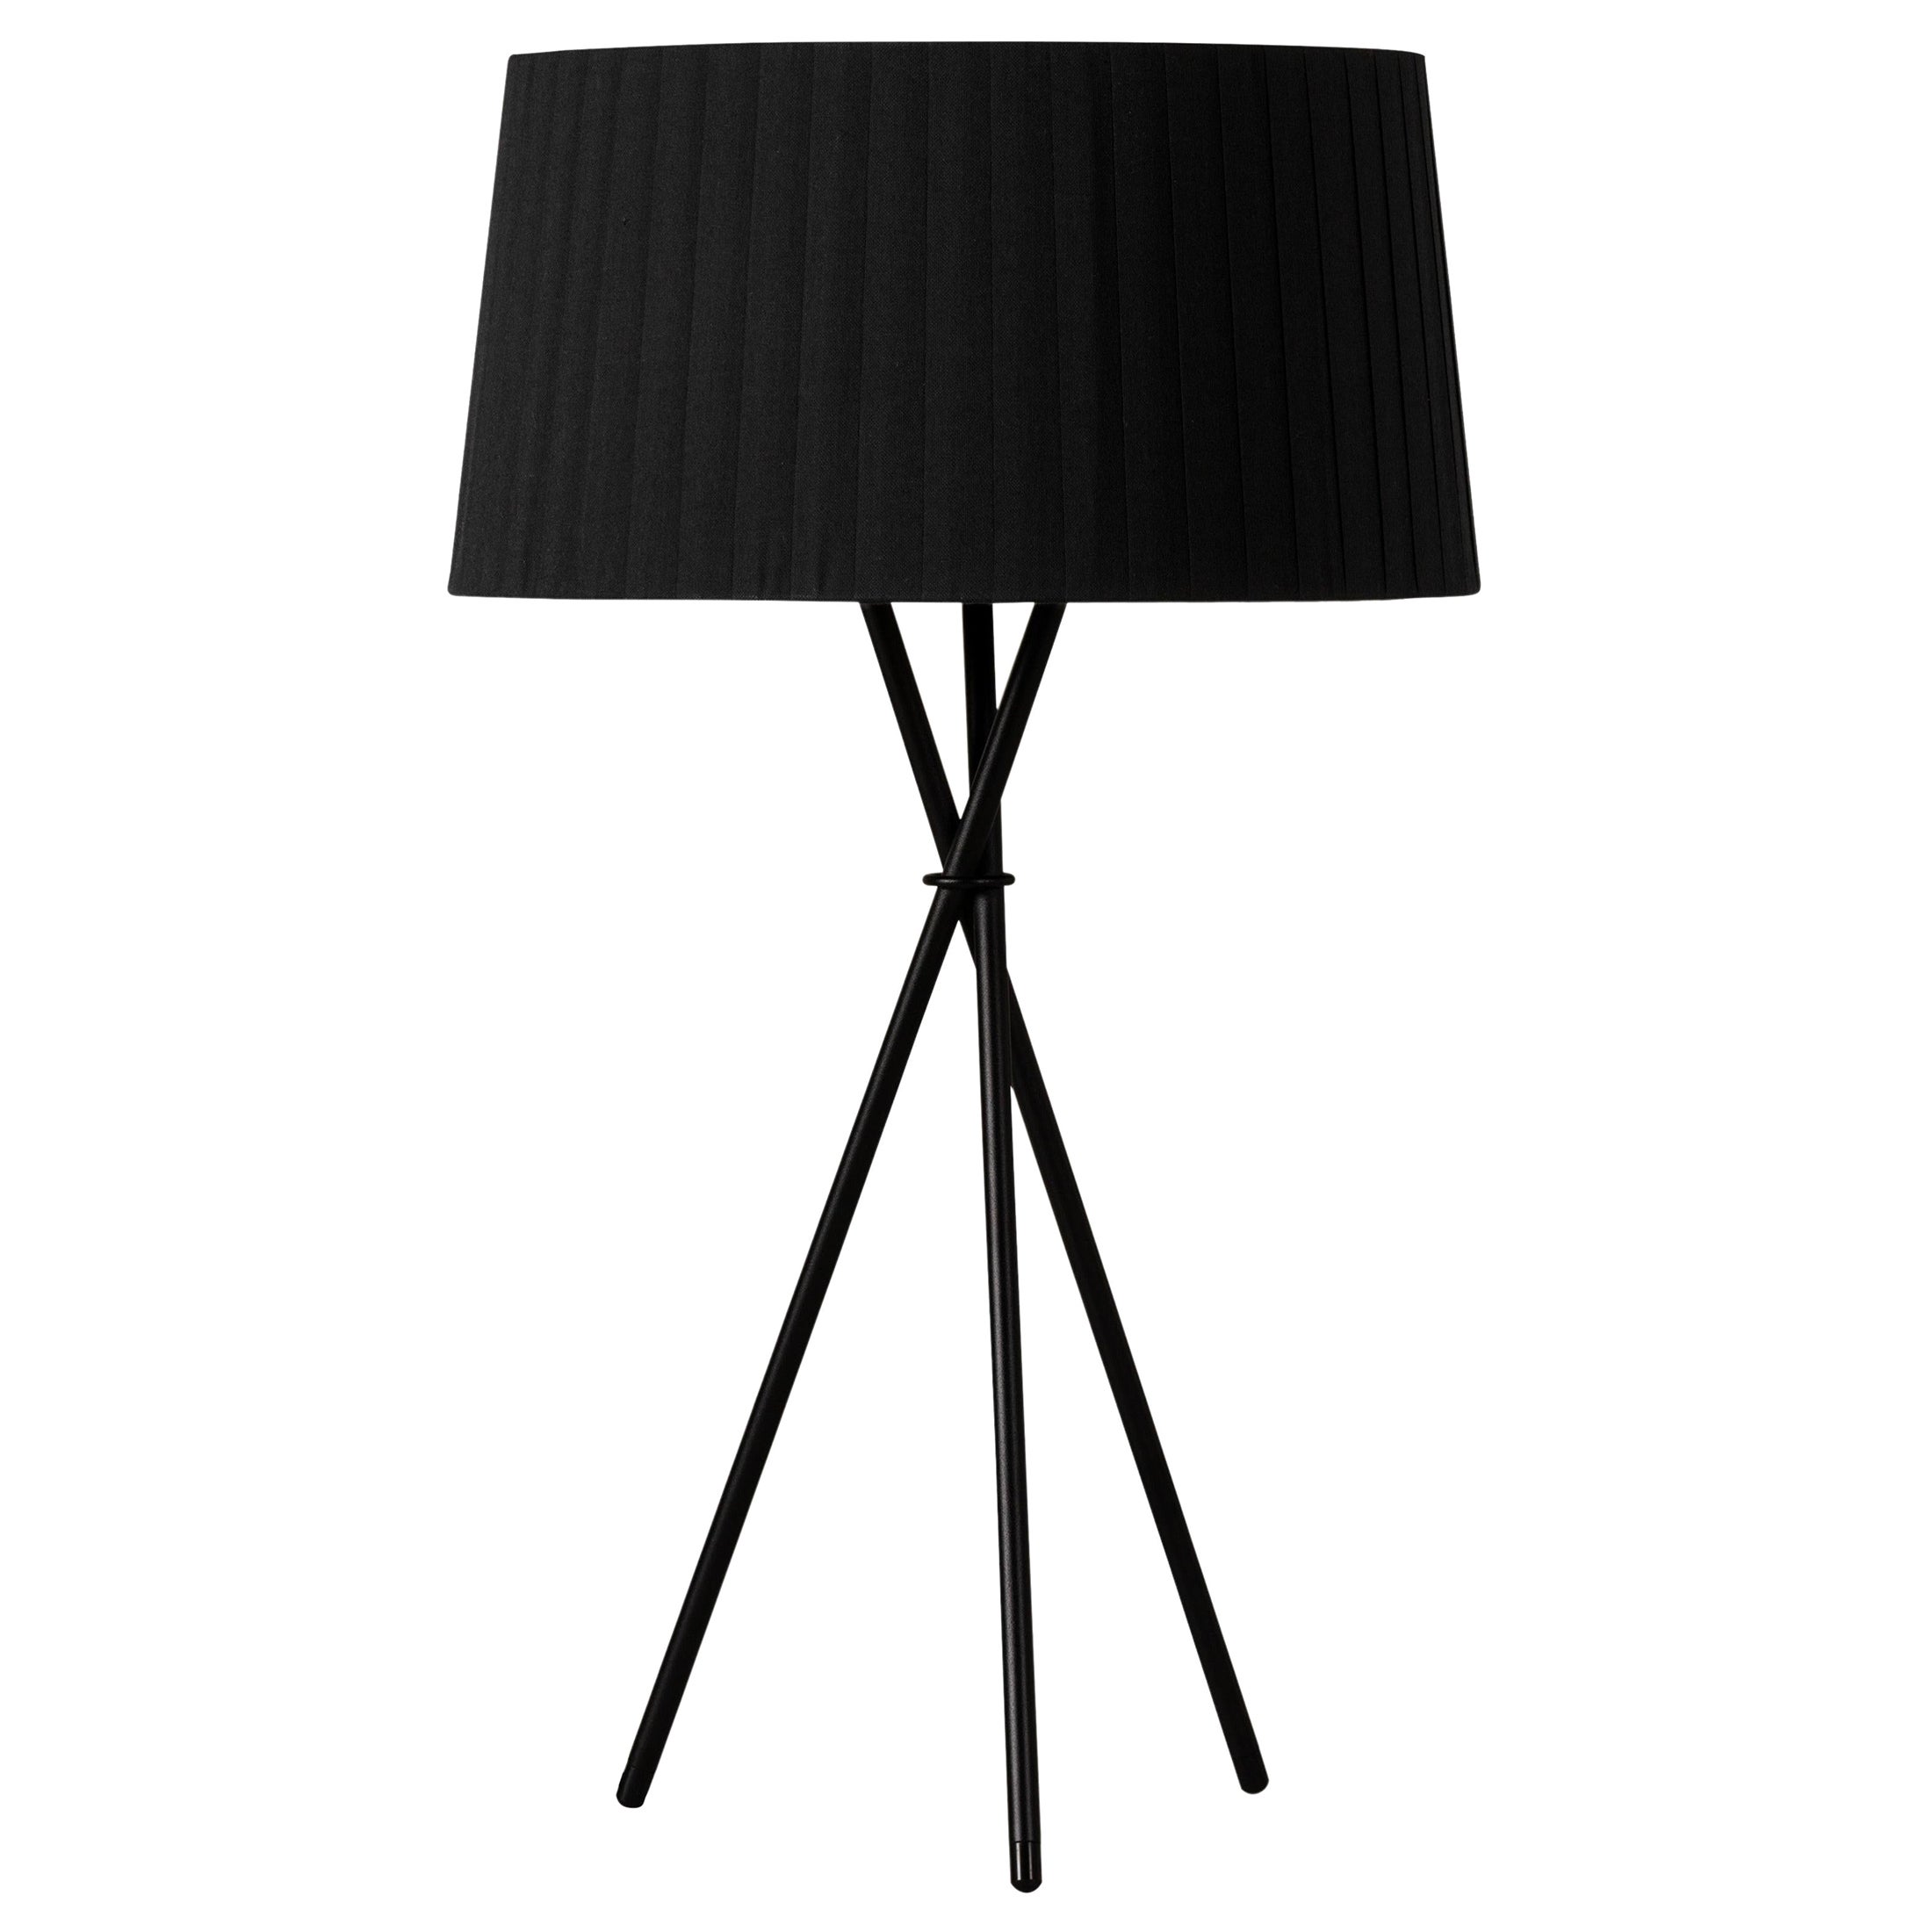 Black Trípode G6 Table Lamp by Santa & Cole